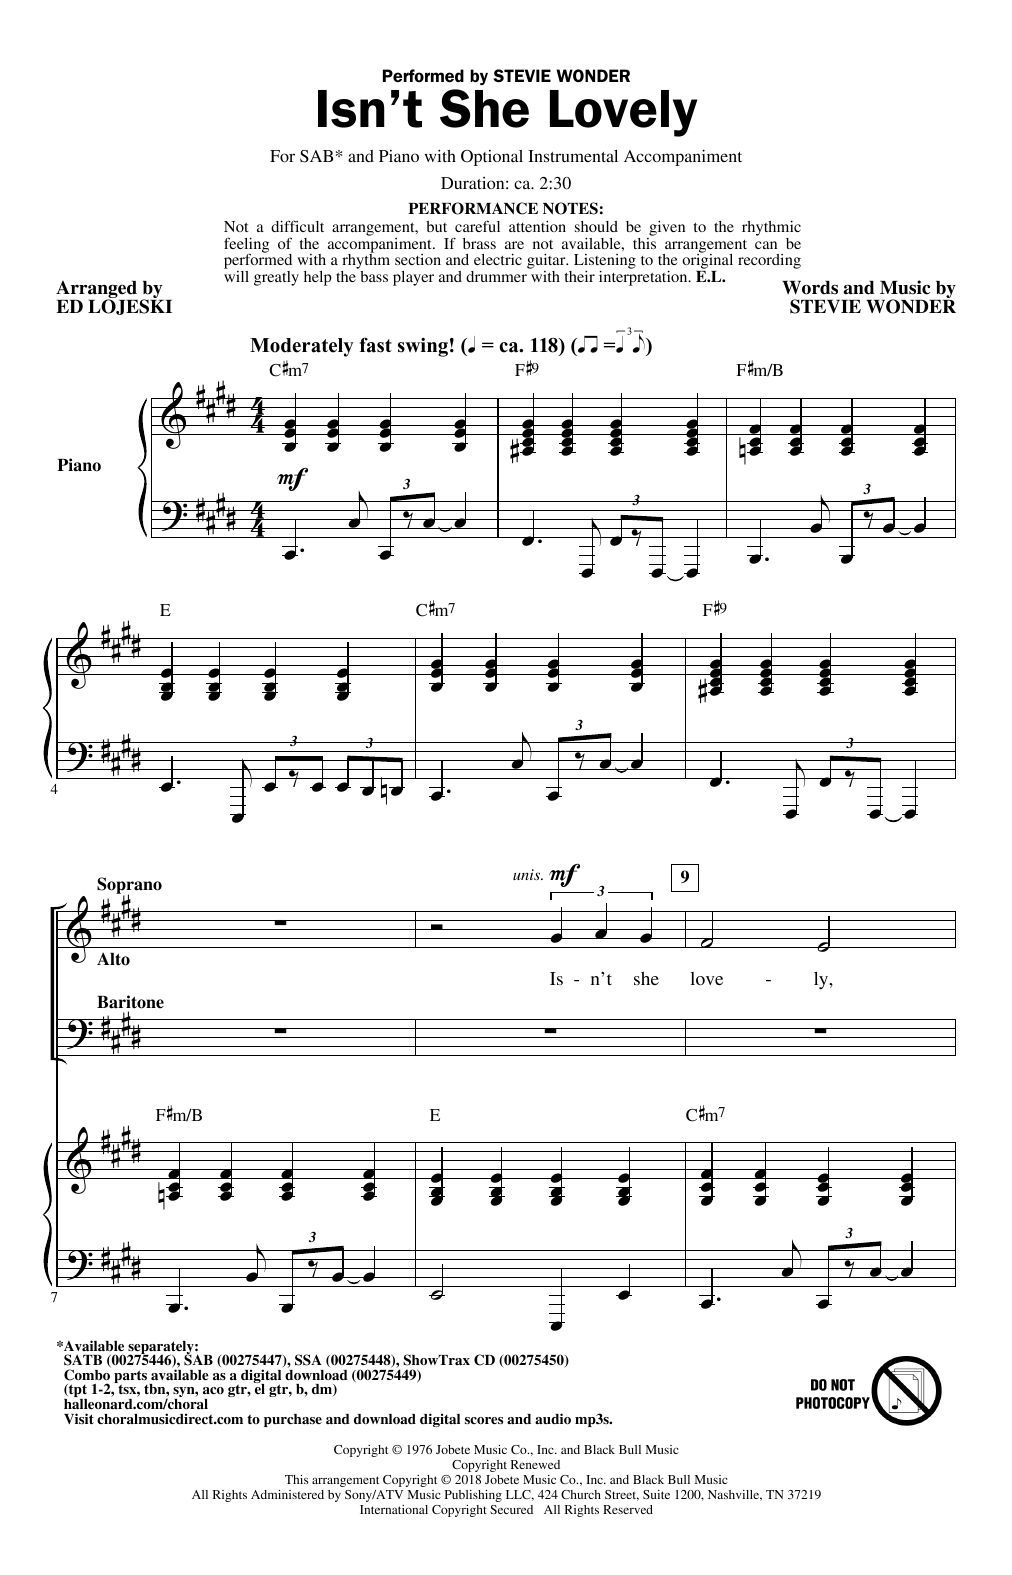 Stevie Wonder Isn't She Lovely (arr. Ed Lojeski) Sheet Music Notes & Chords for SATB - Download or Print PDF